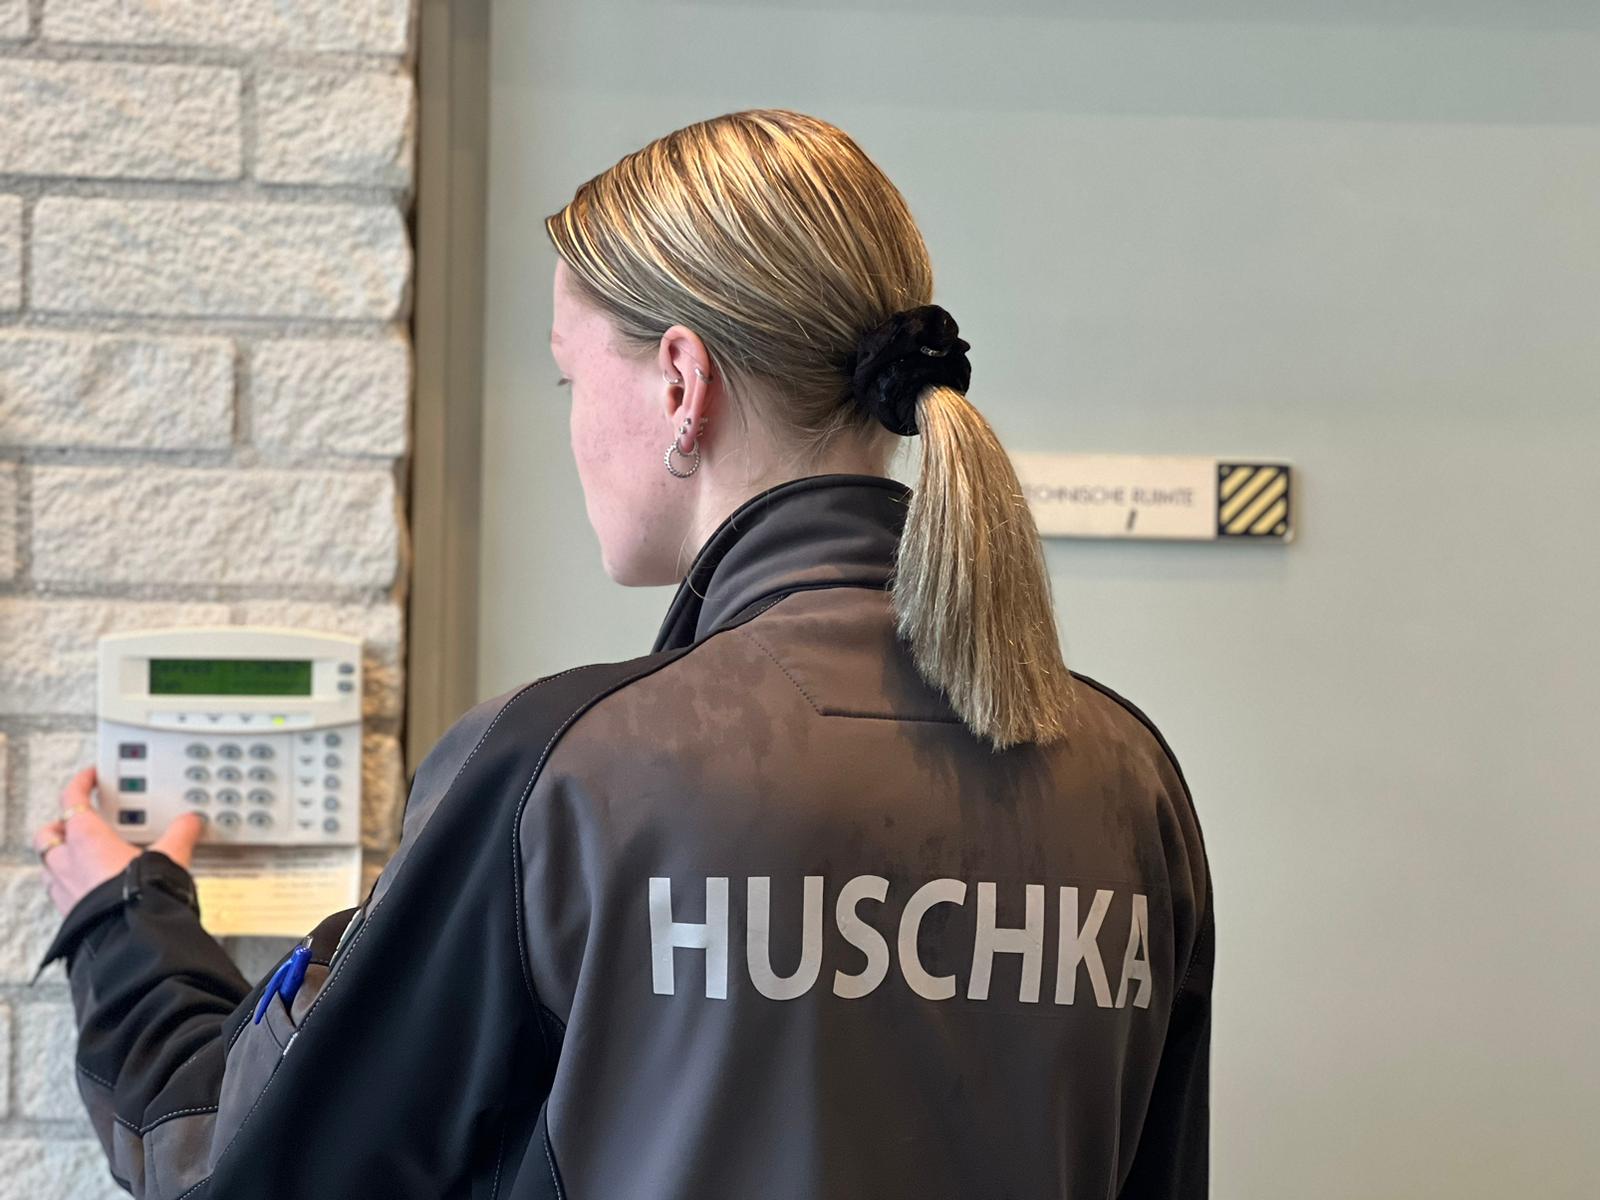 Huschka Surveillant bedient alarmsysteem